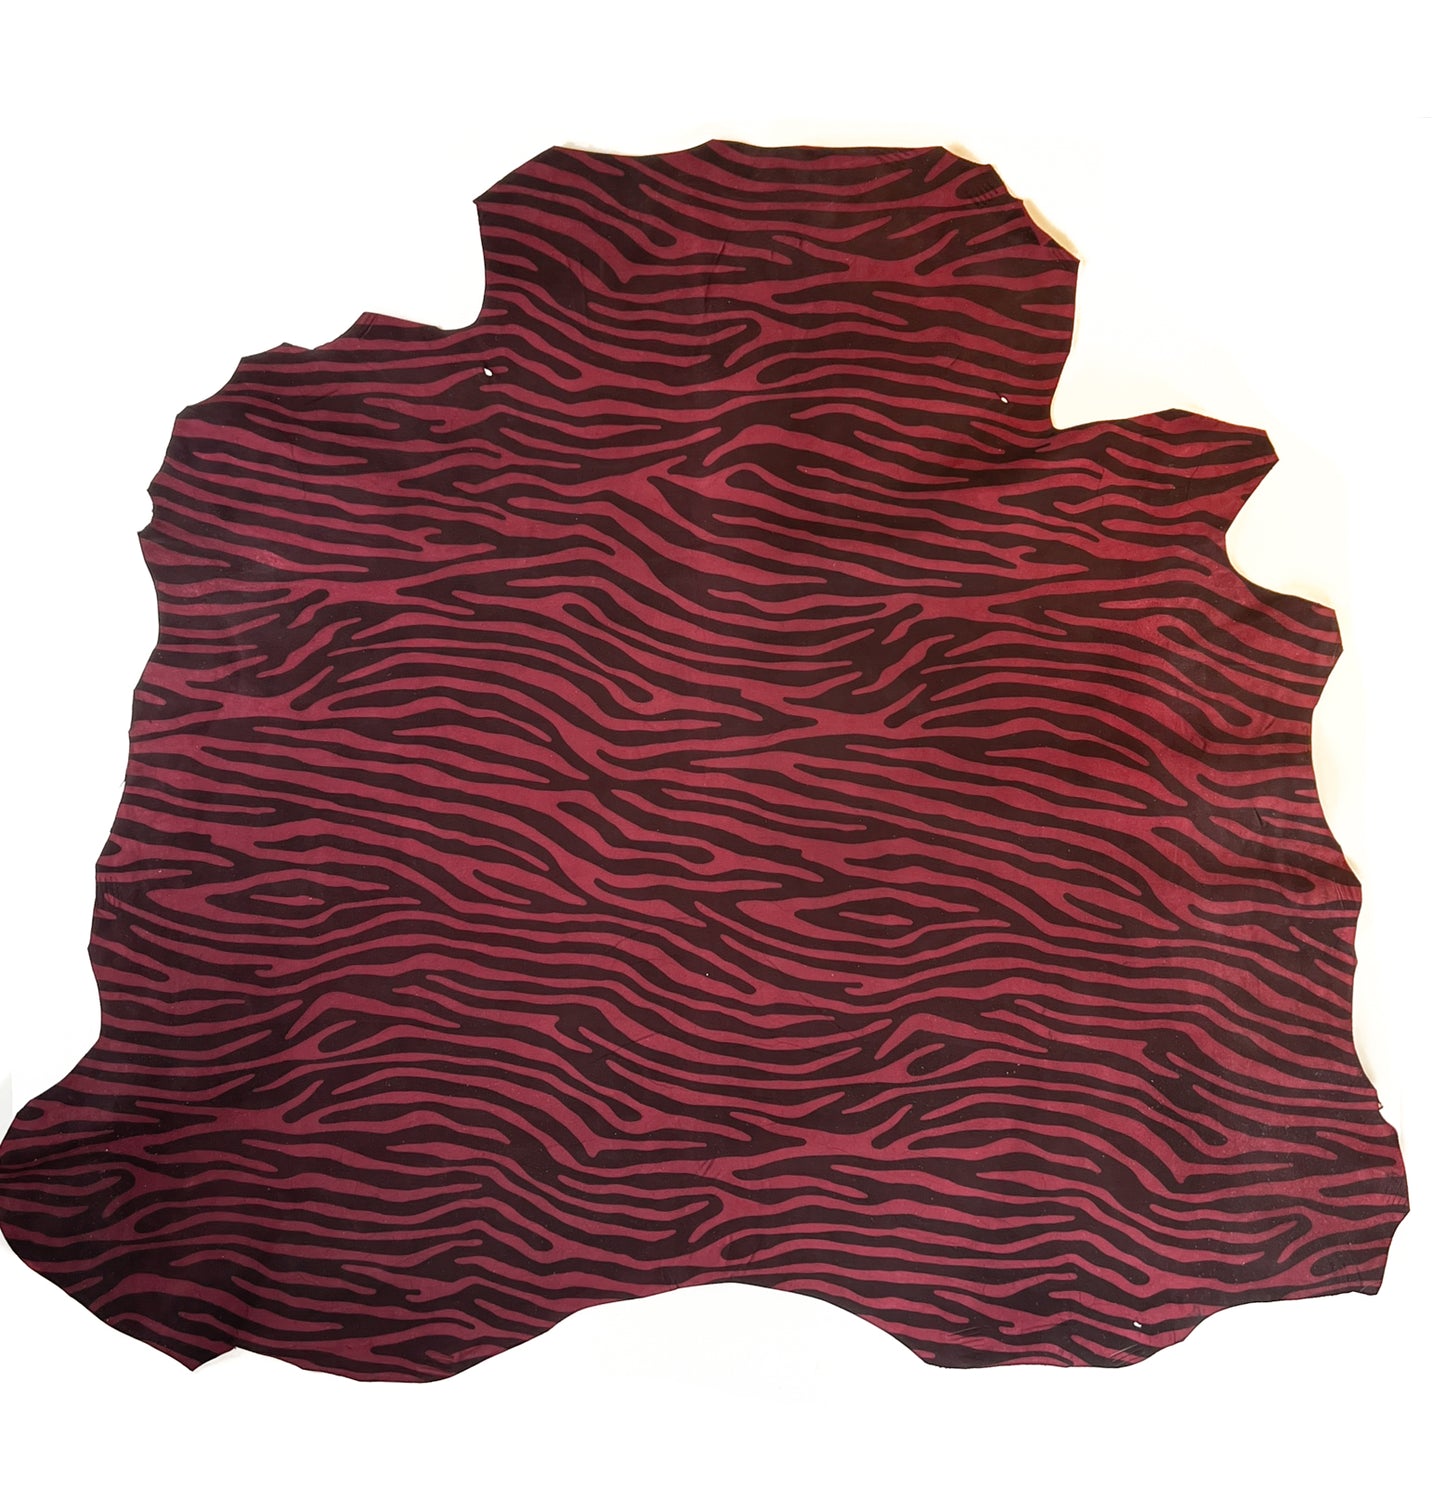 Soft Dark Red Zebra Print Lambskin 0.7-1.2mm/1.75-3oz / RED ZEBRA1446